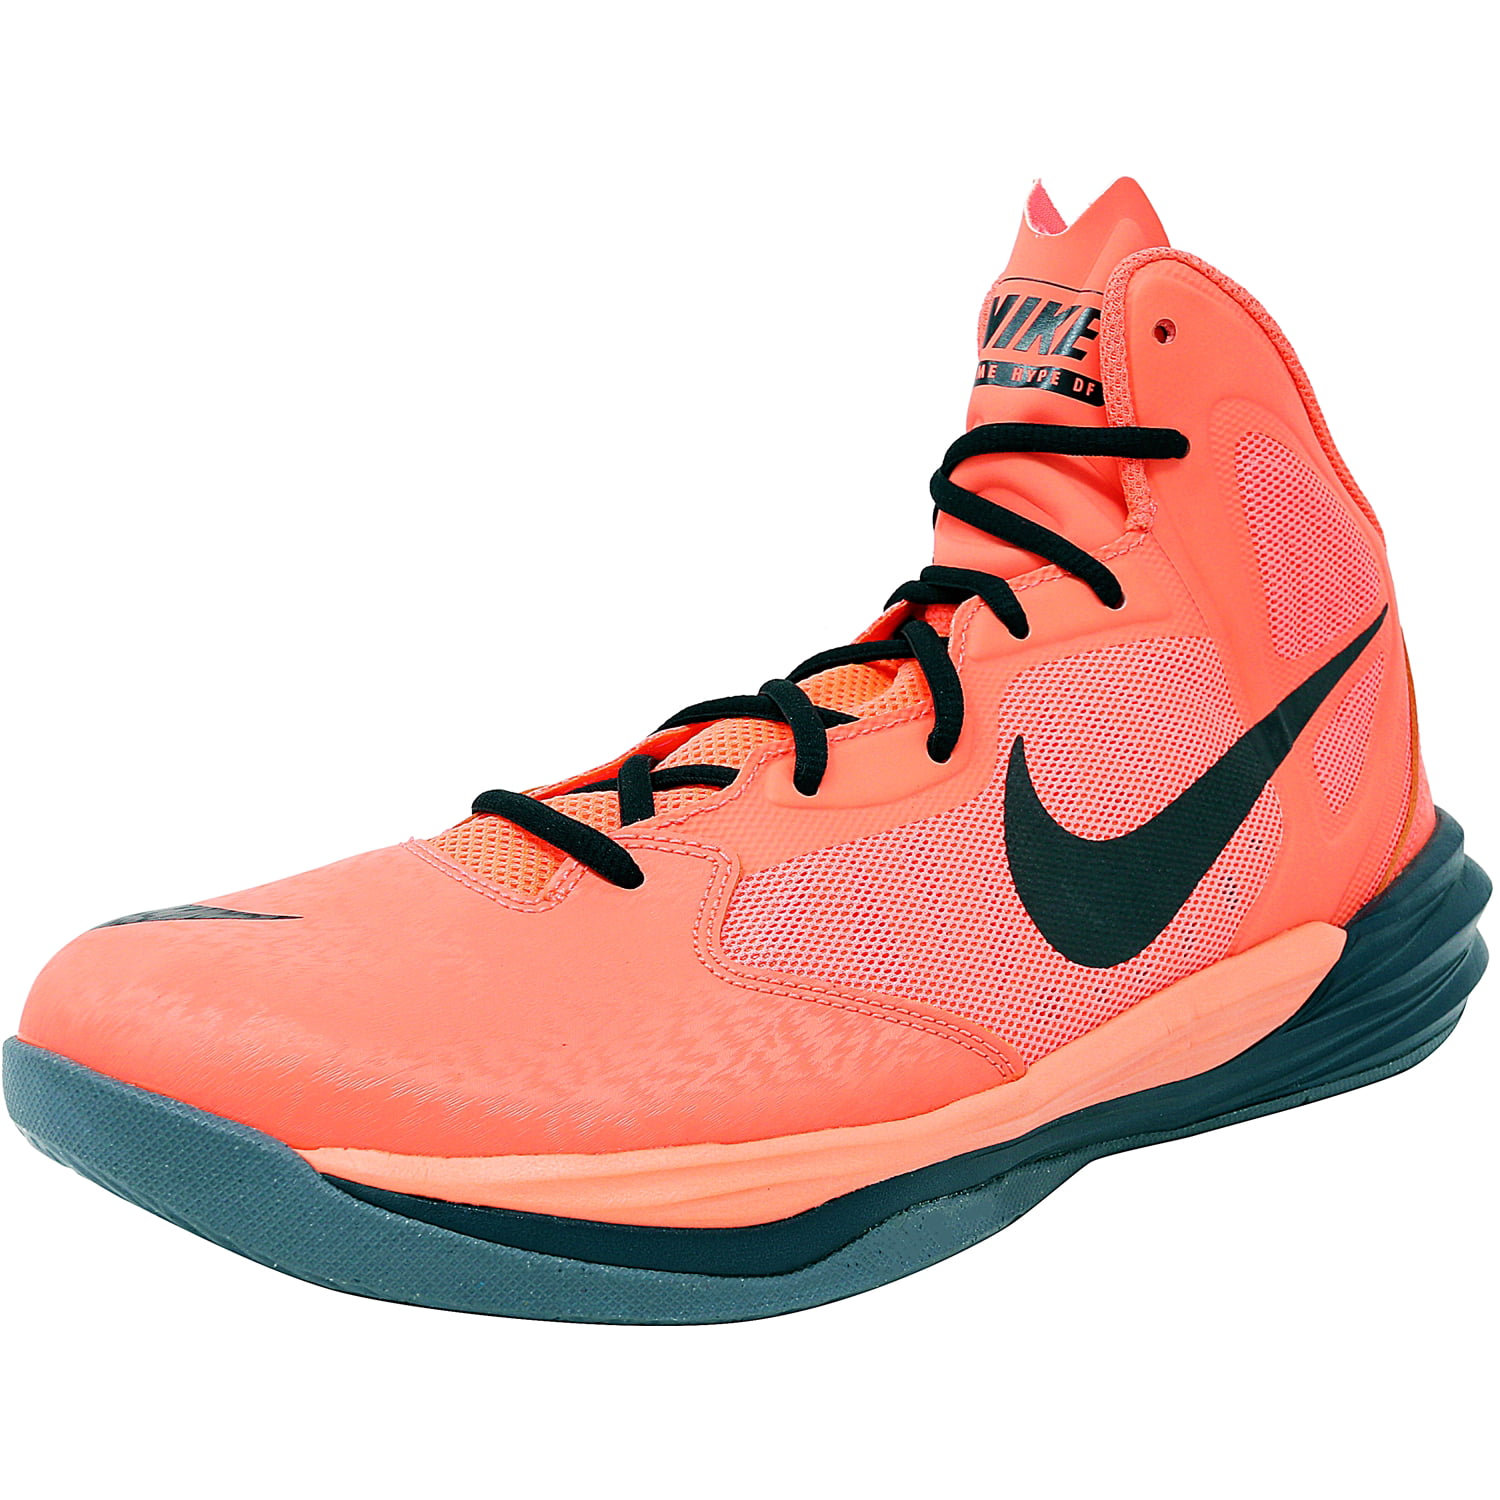 Nike Nike Mens 683705 801 High Top Basketball Shoe 115m Walmart 